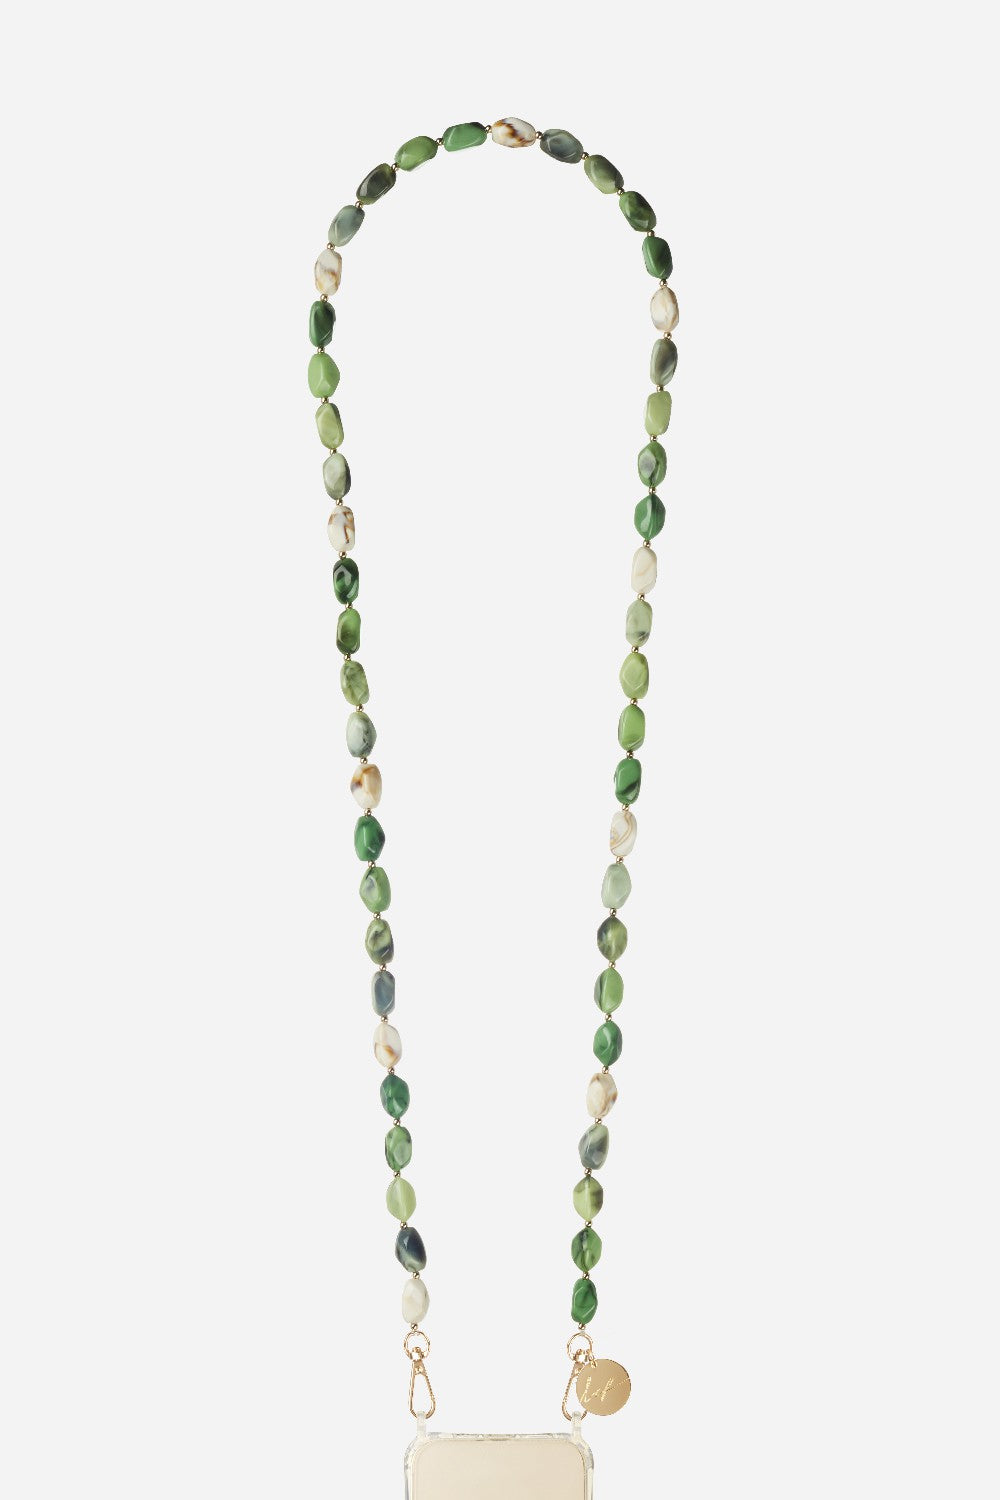 Polly Green Long Chain 120 cm